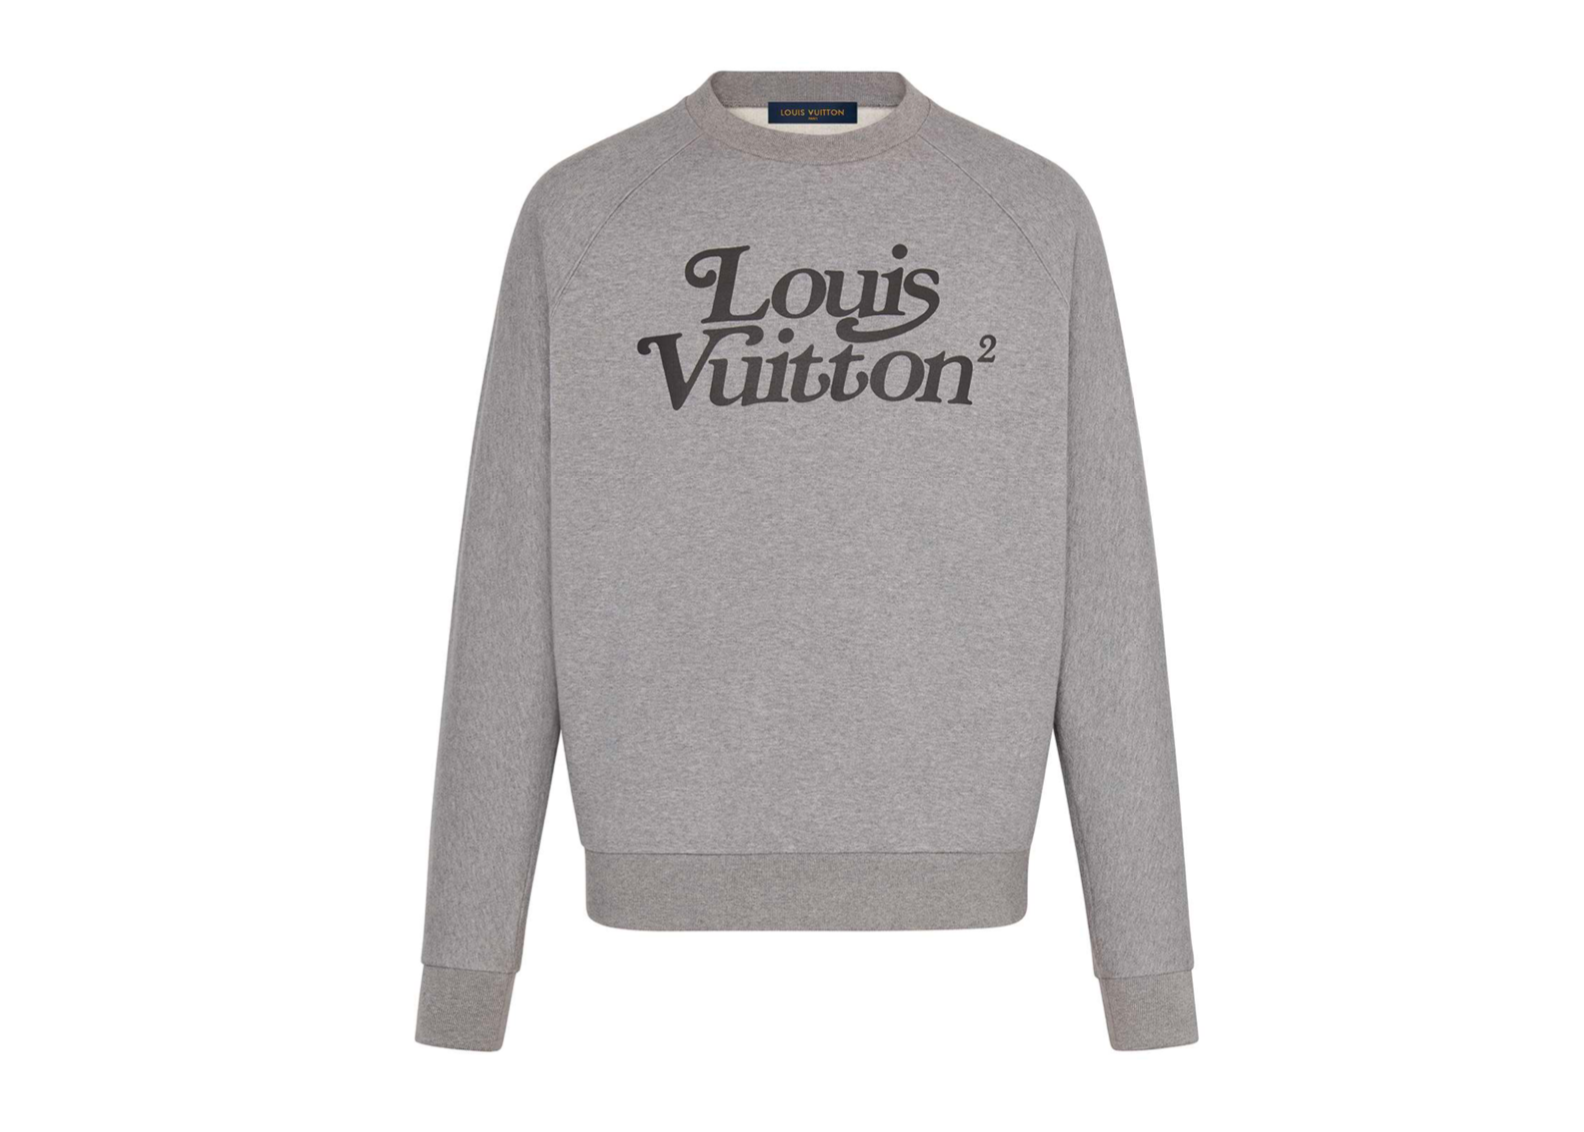 Louis Vuitton X Supreme Hoodie Black Clearance Seller 48 OFF   maikyaulawcom